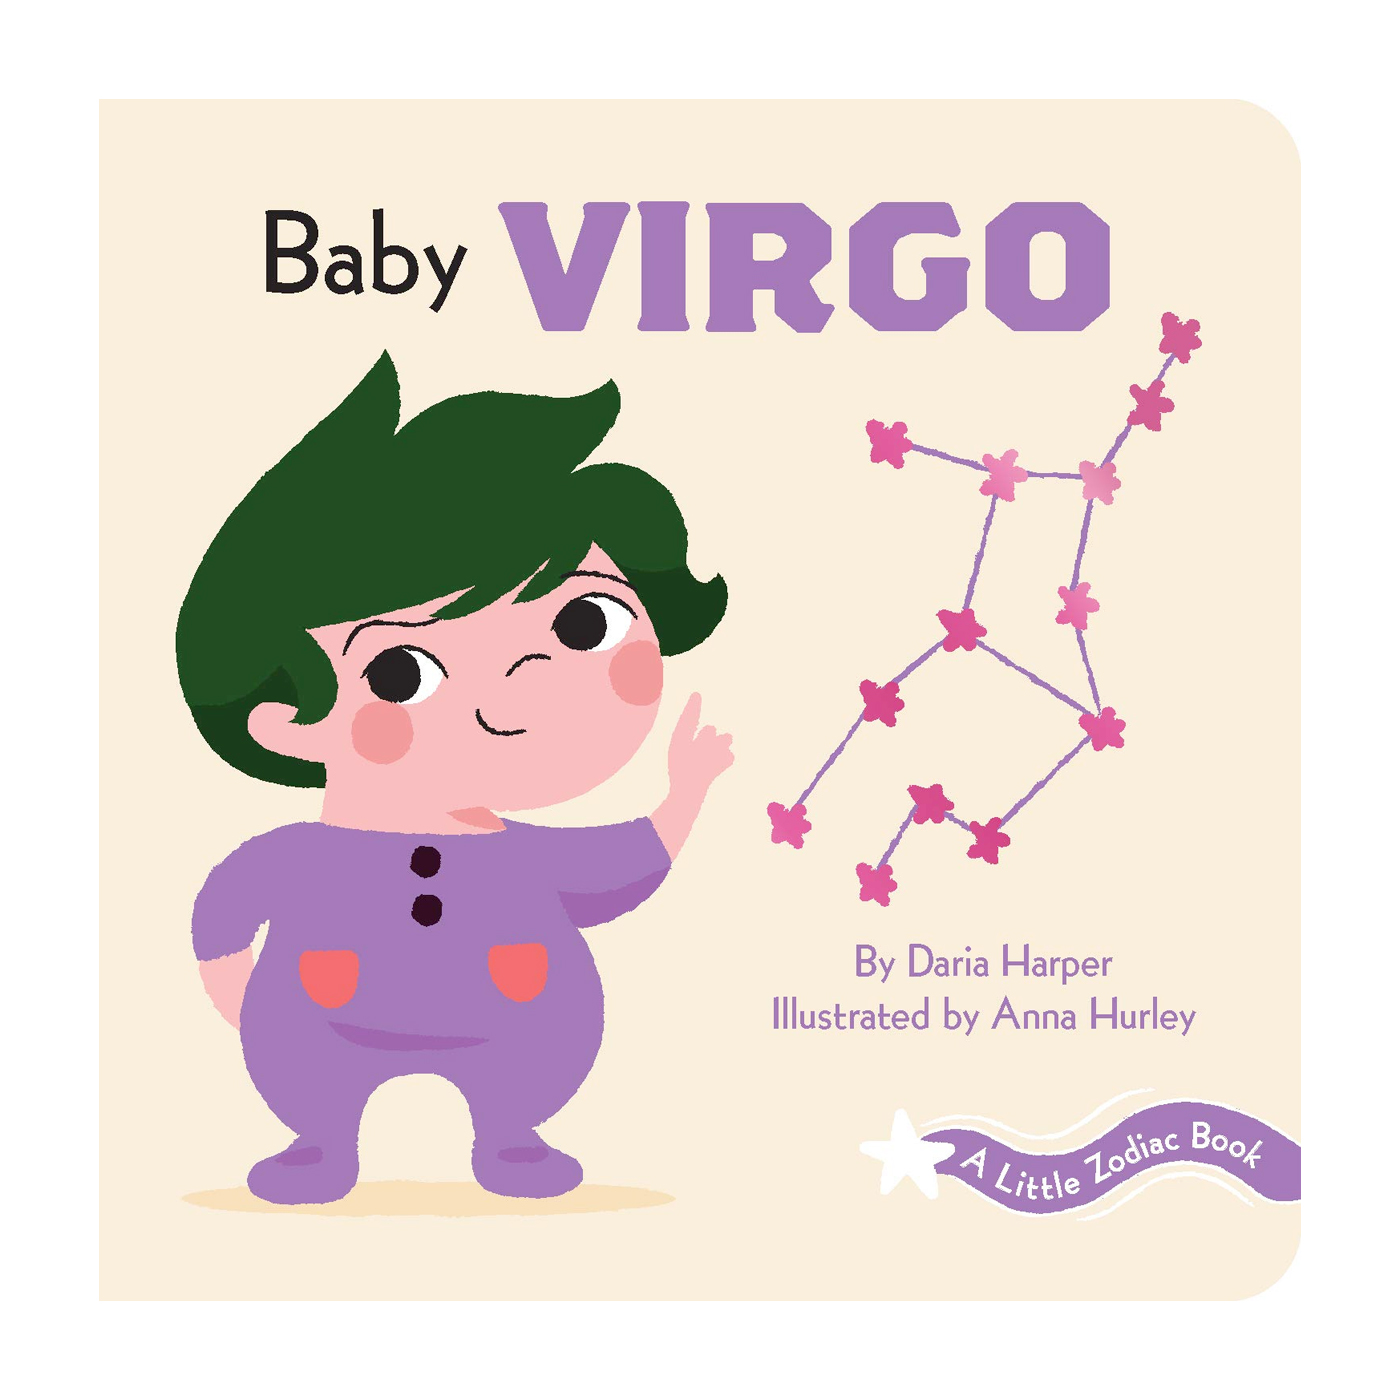  Little Zodiac Book: Baby Virgo